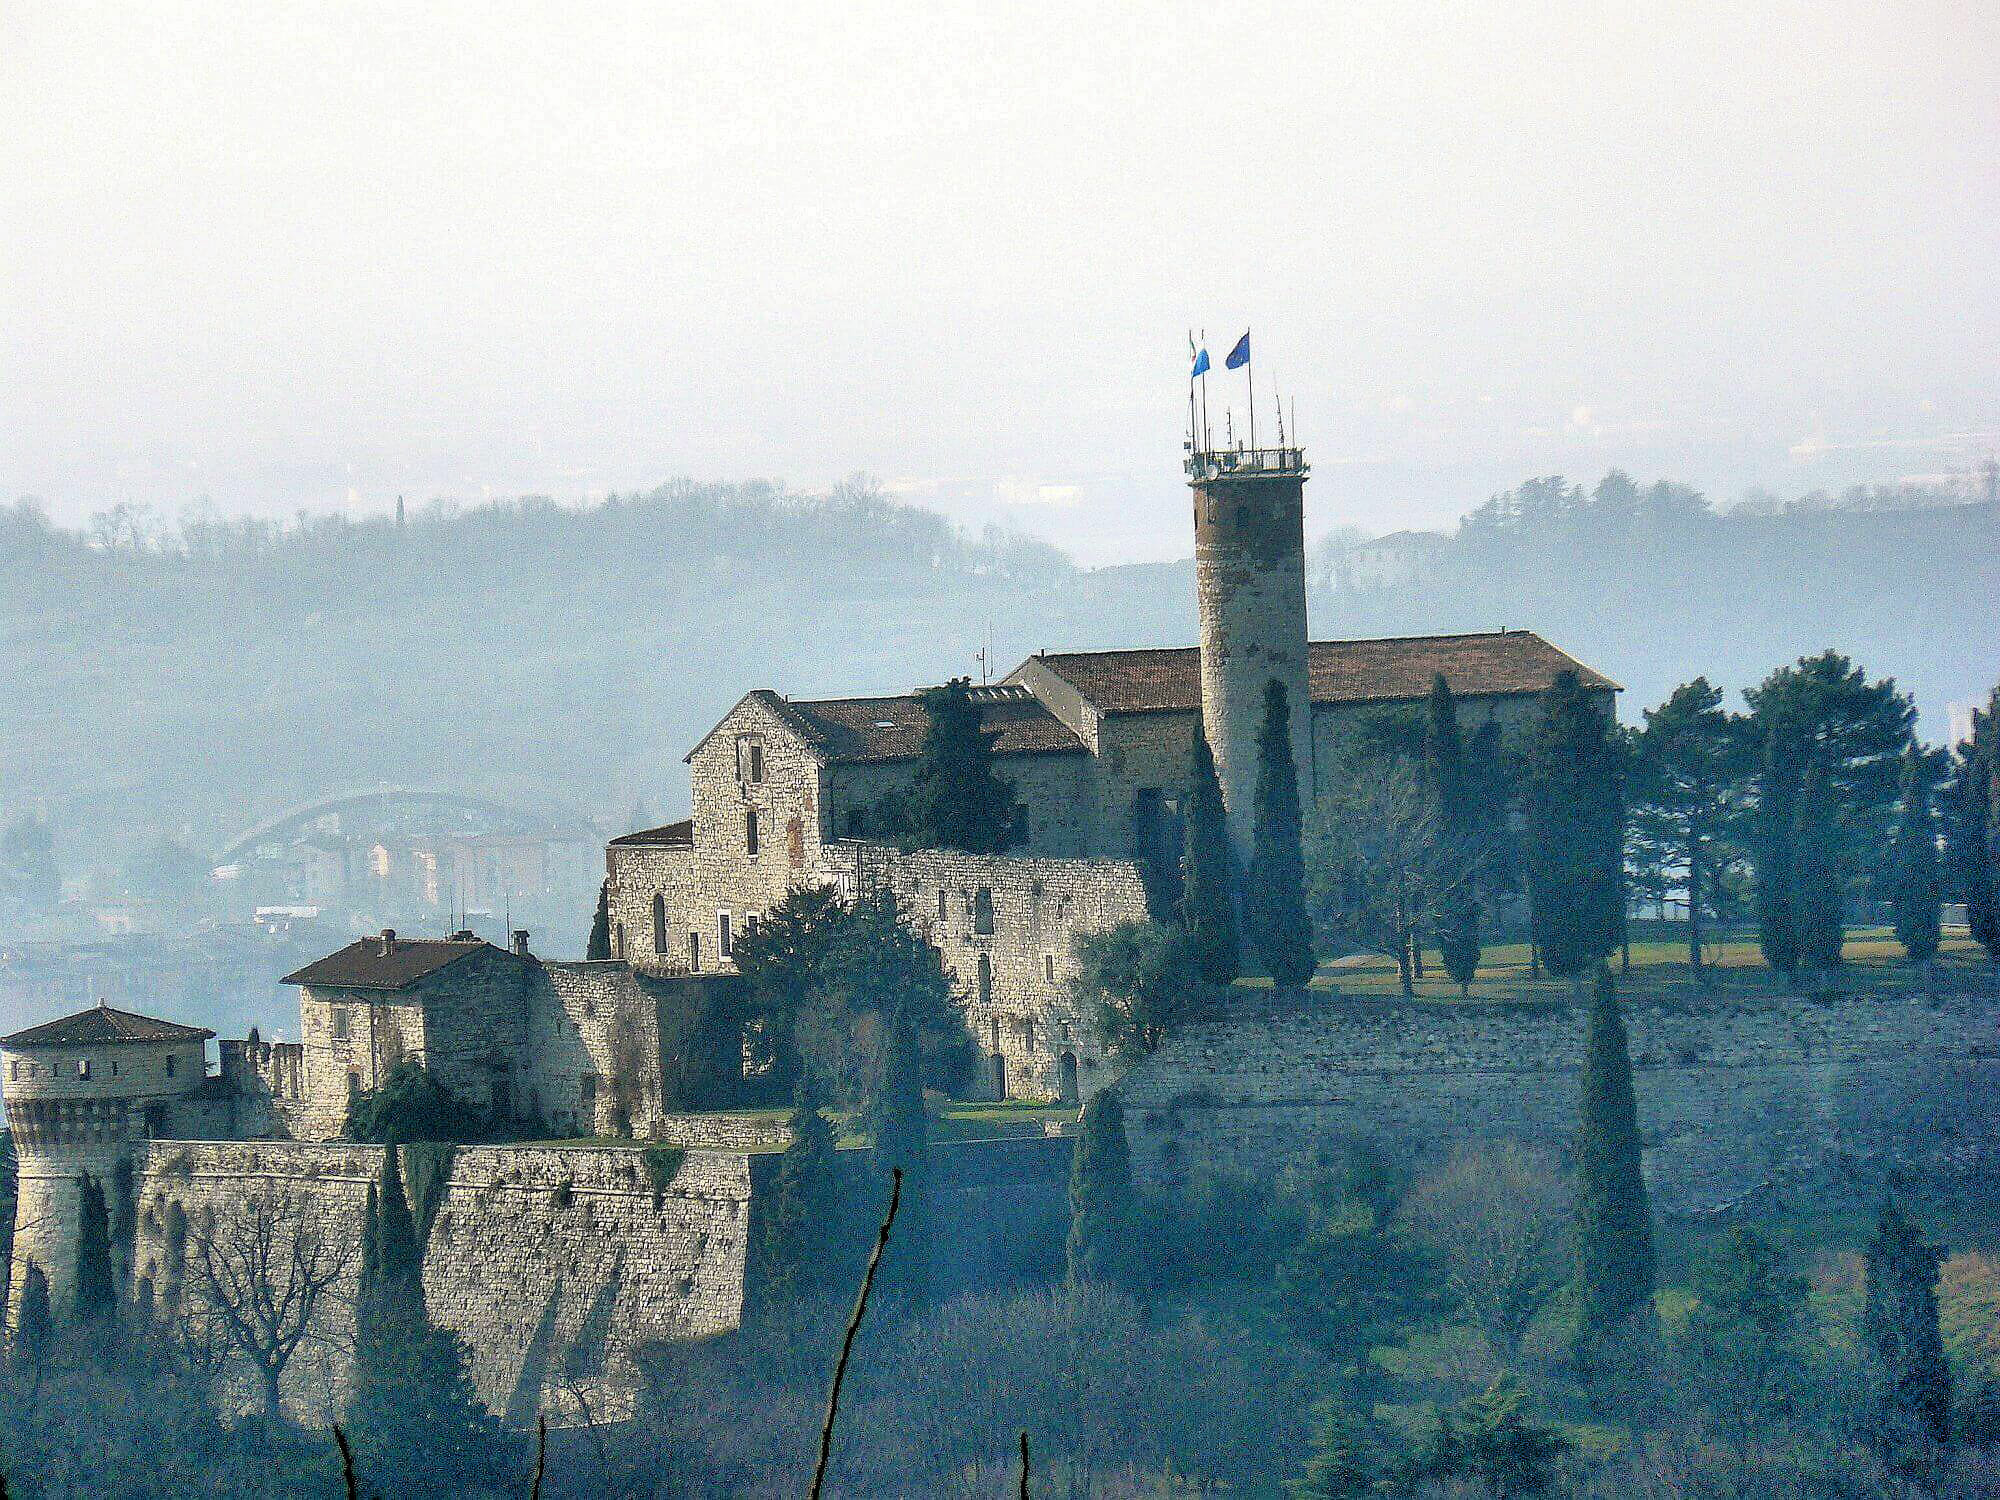 Zamek w Brescii (Castello di Brescia) widziany z via Panoramica.